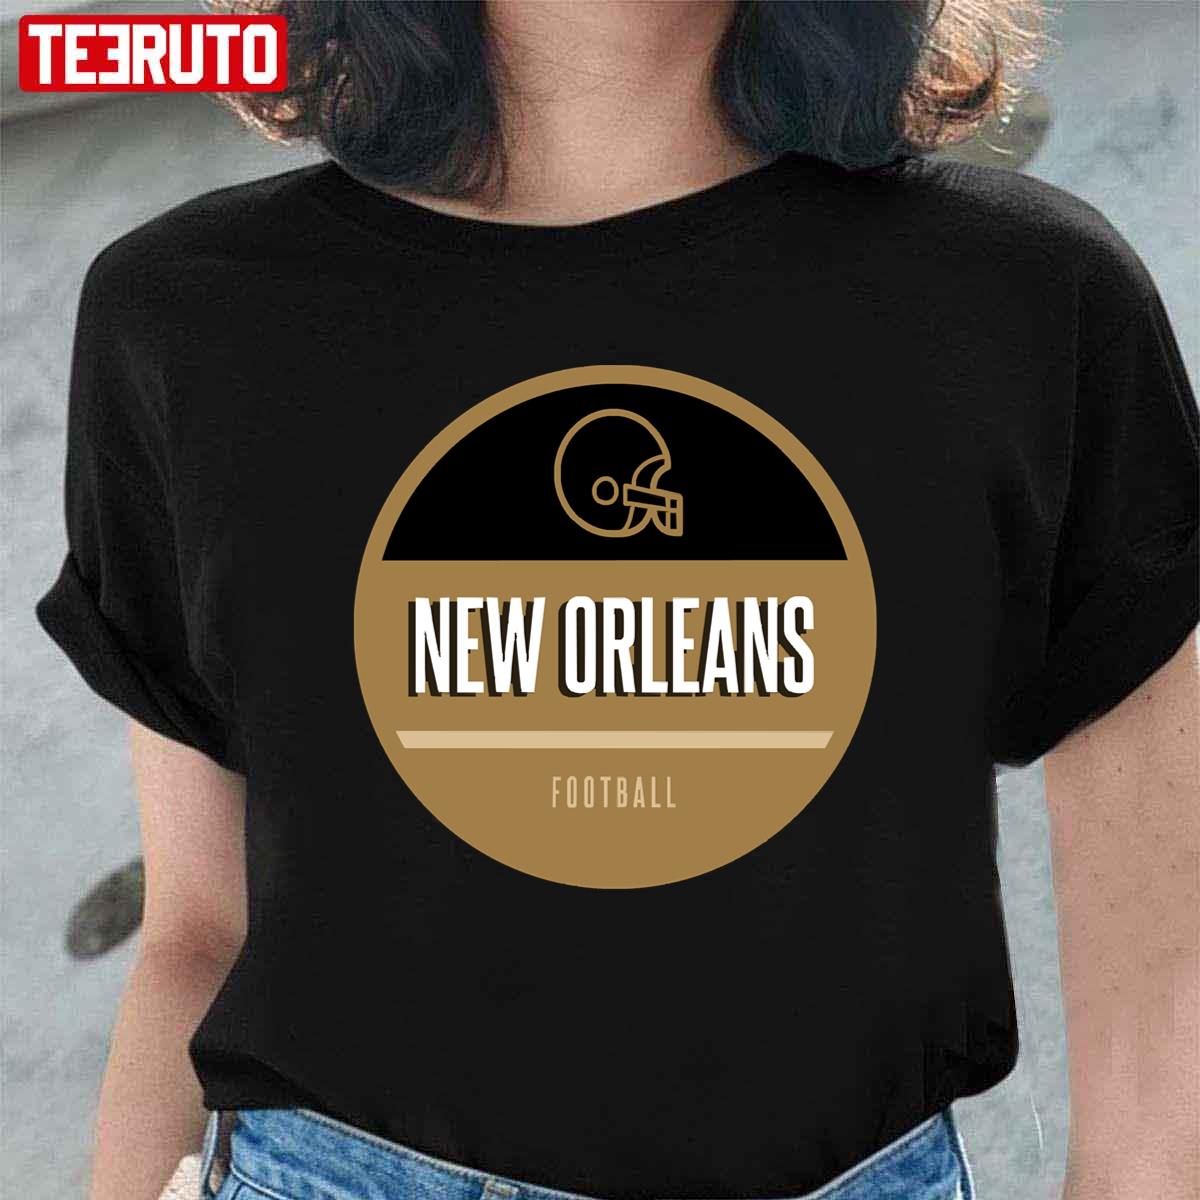 New Orleans Retro Football Unisex T-Shirt